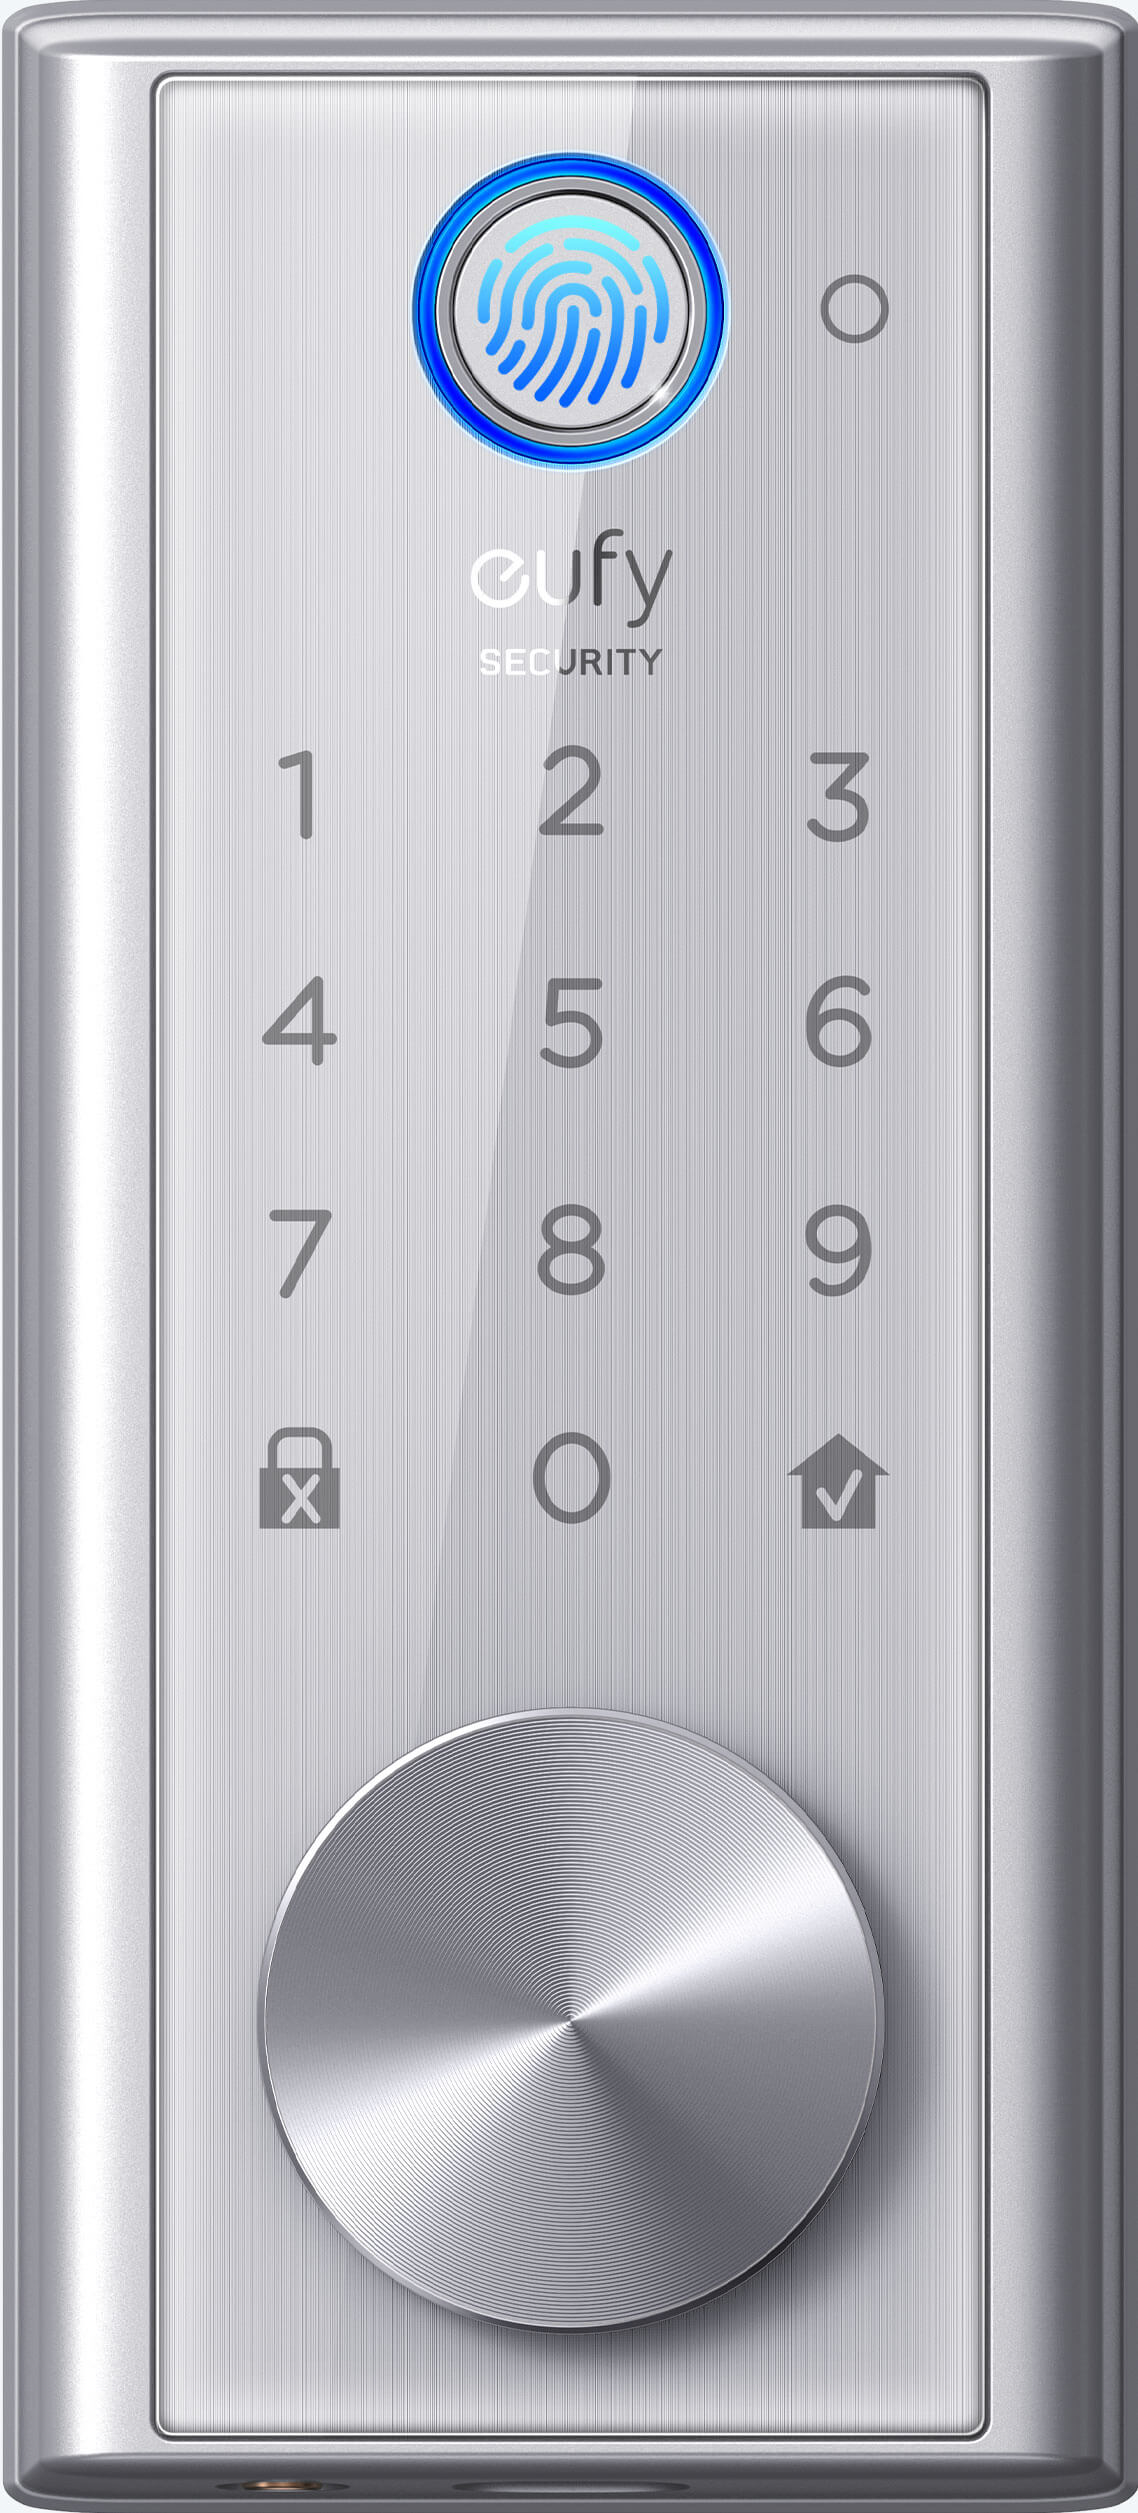 Smart Lock S230